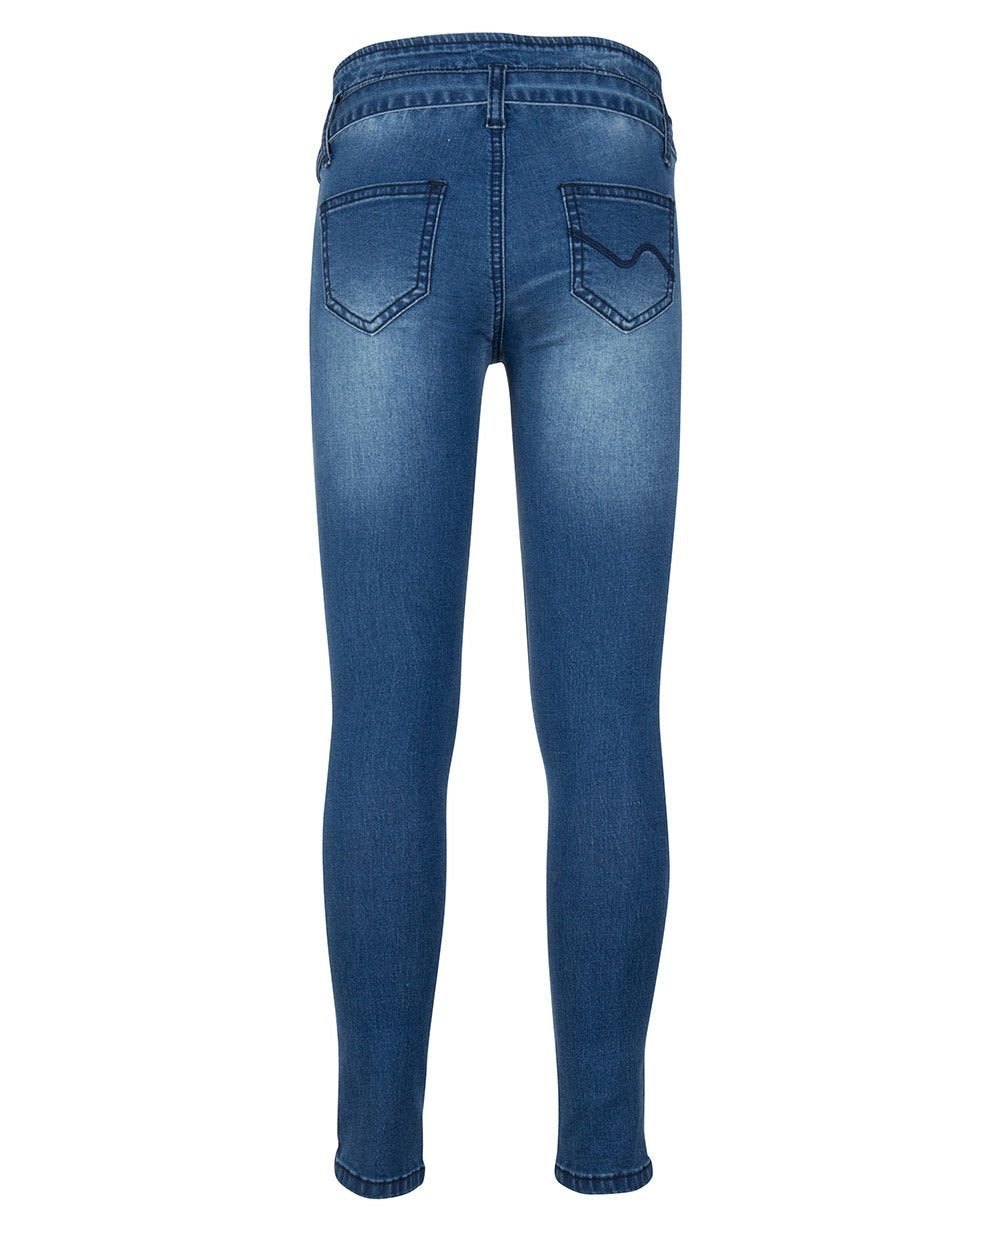 Meisjes BLUE LIV PAPERBAG FIT van Indian Blue Jeans in de kleur Medium Denim in maat 176.